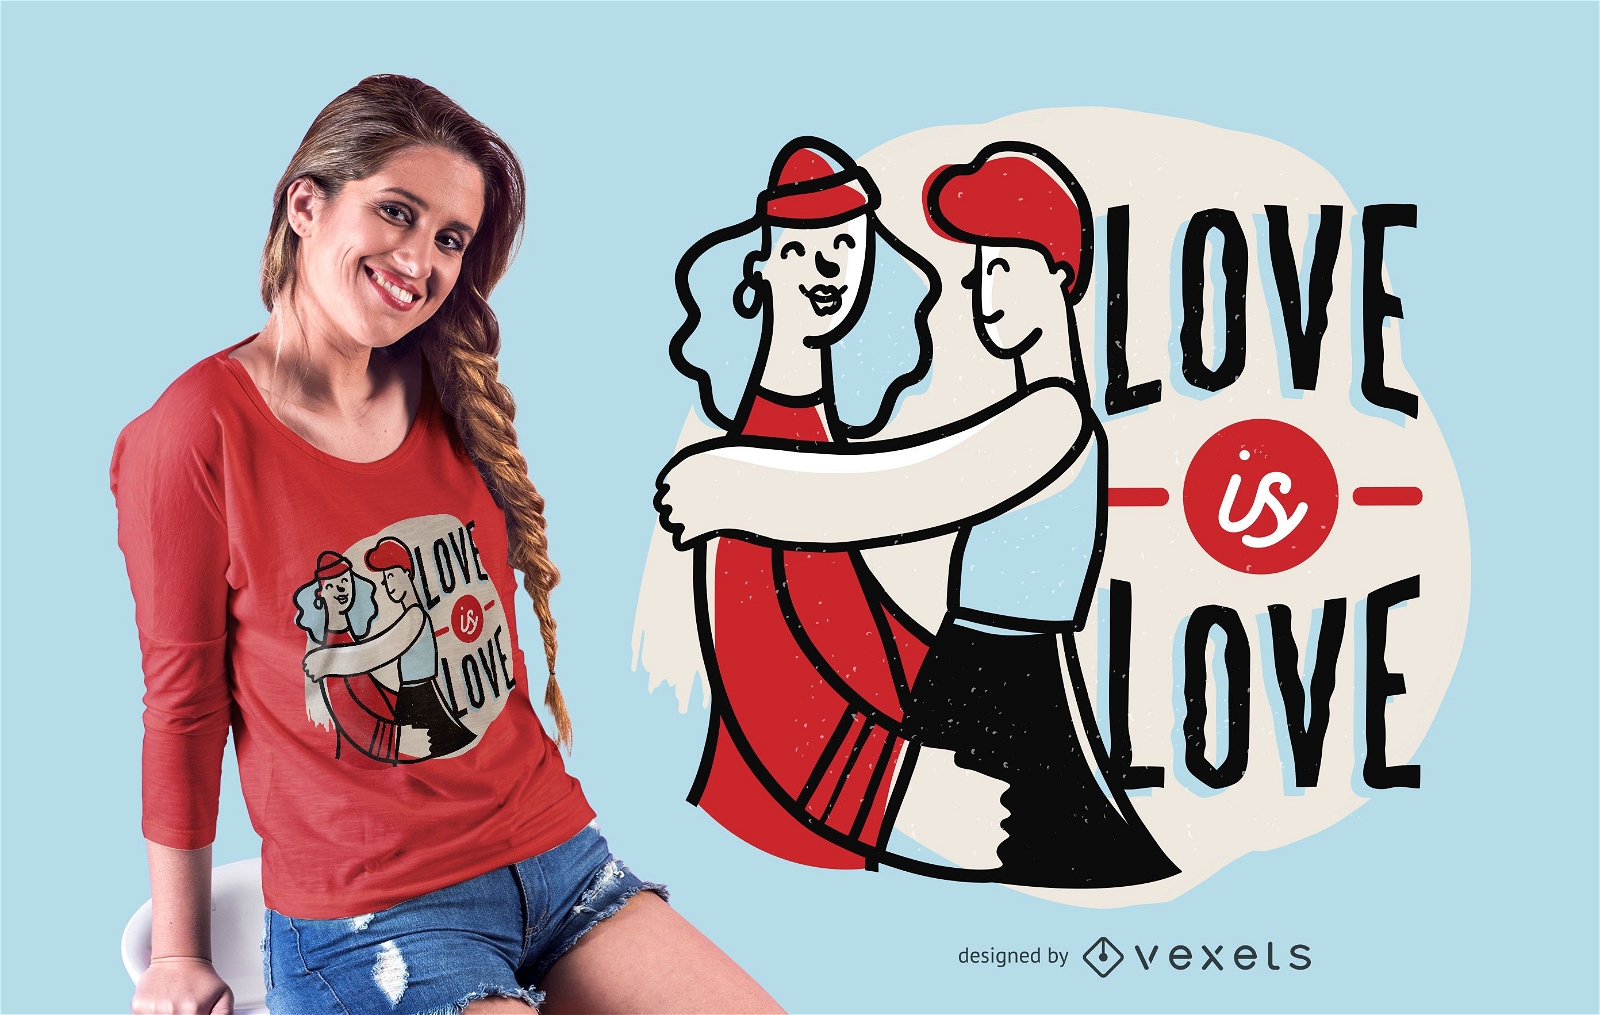 Love is love dise?o de camiseta de pareja de lesbianas